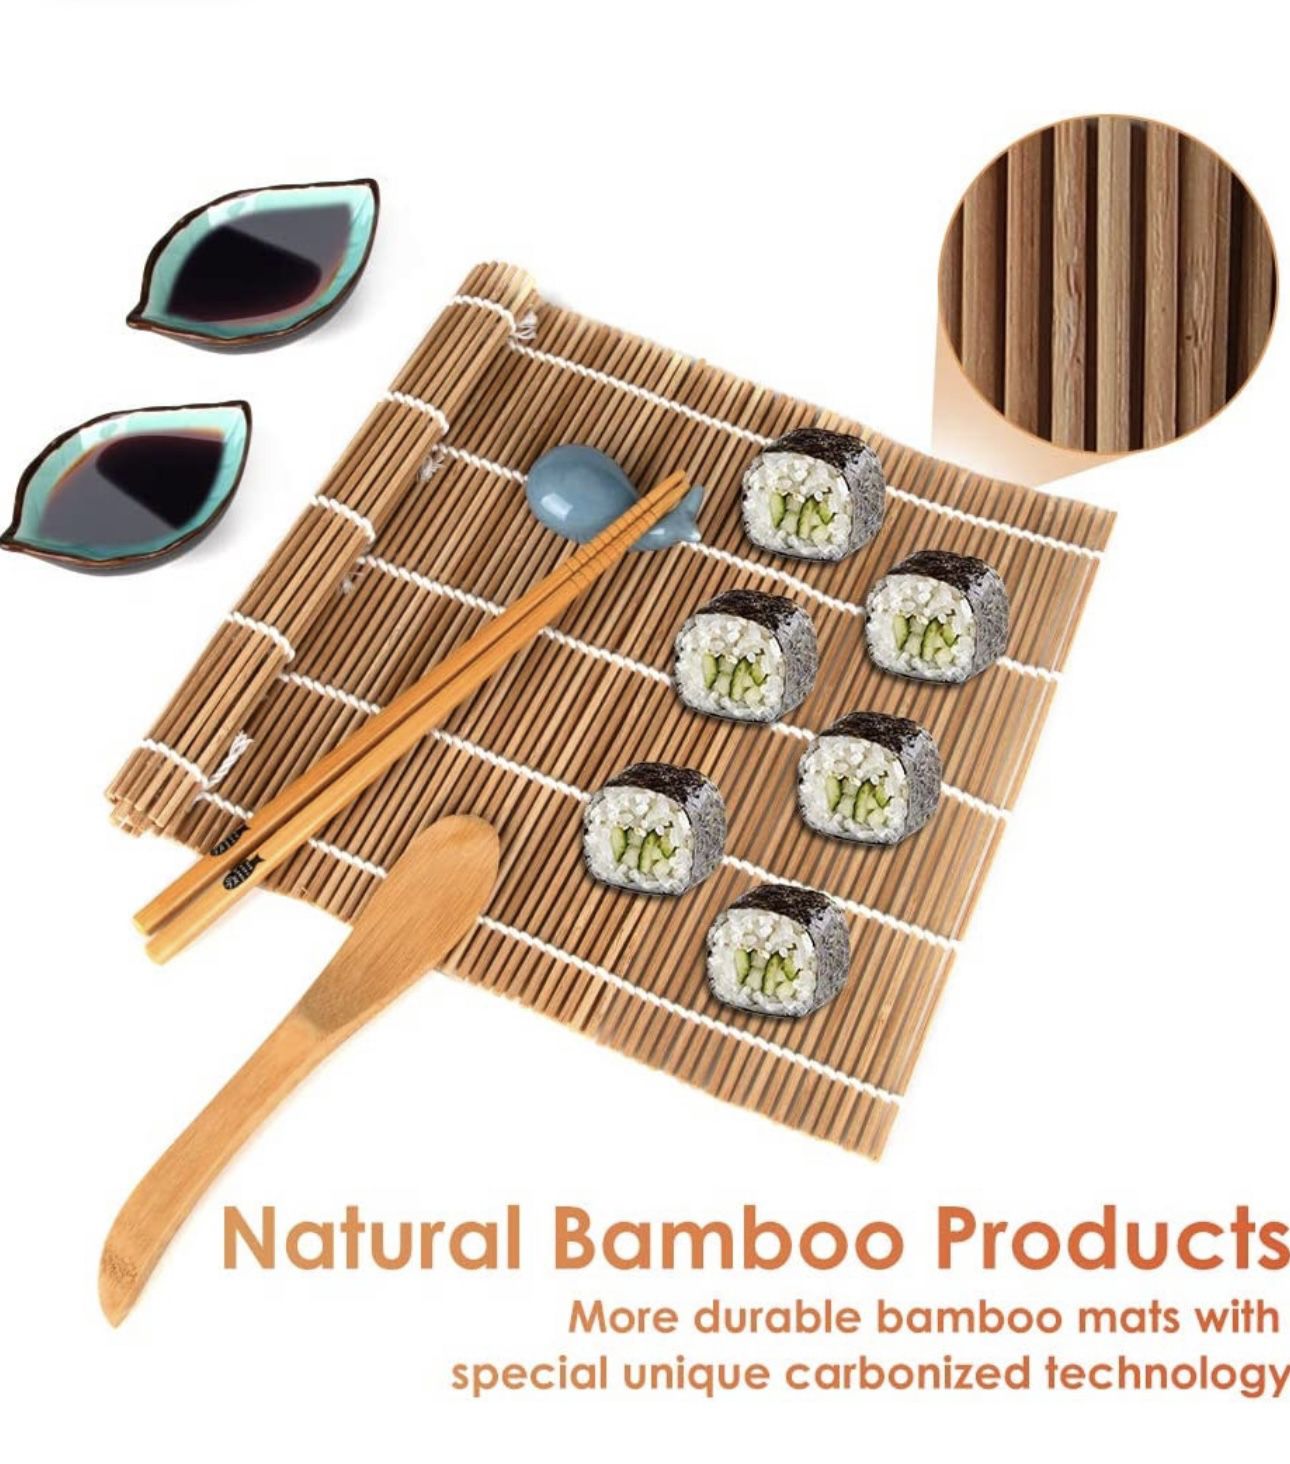 Sushi bazooka – Cook Supplies Online